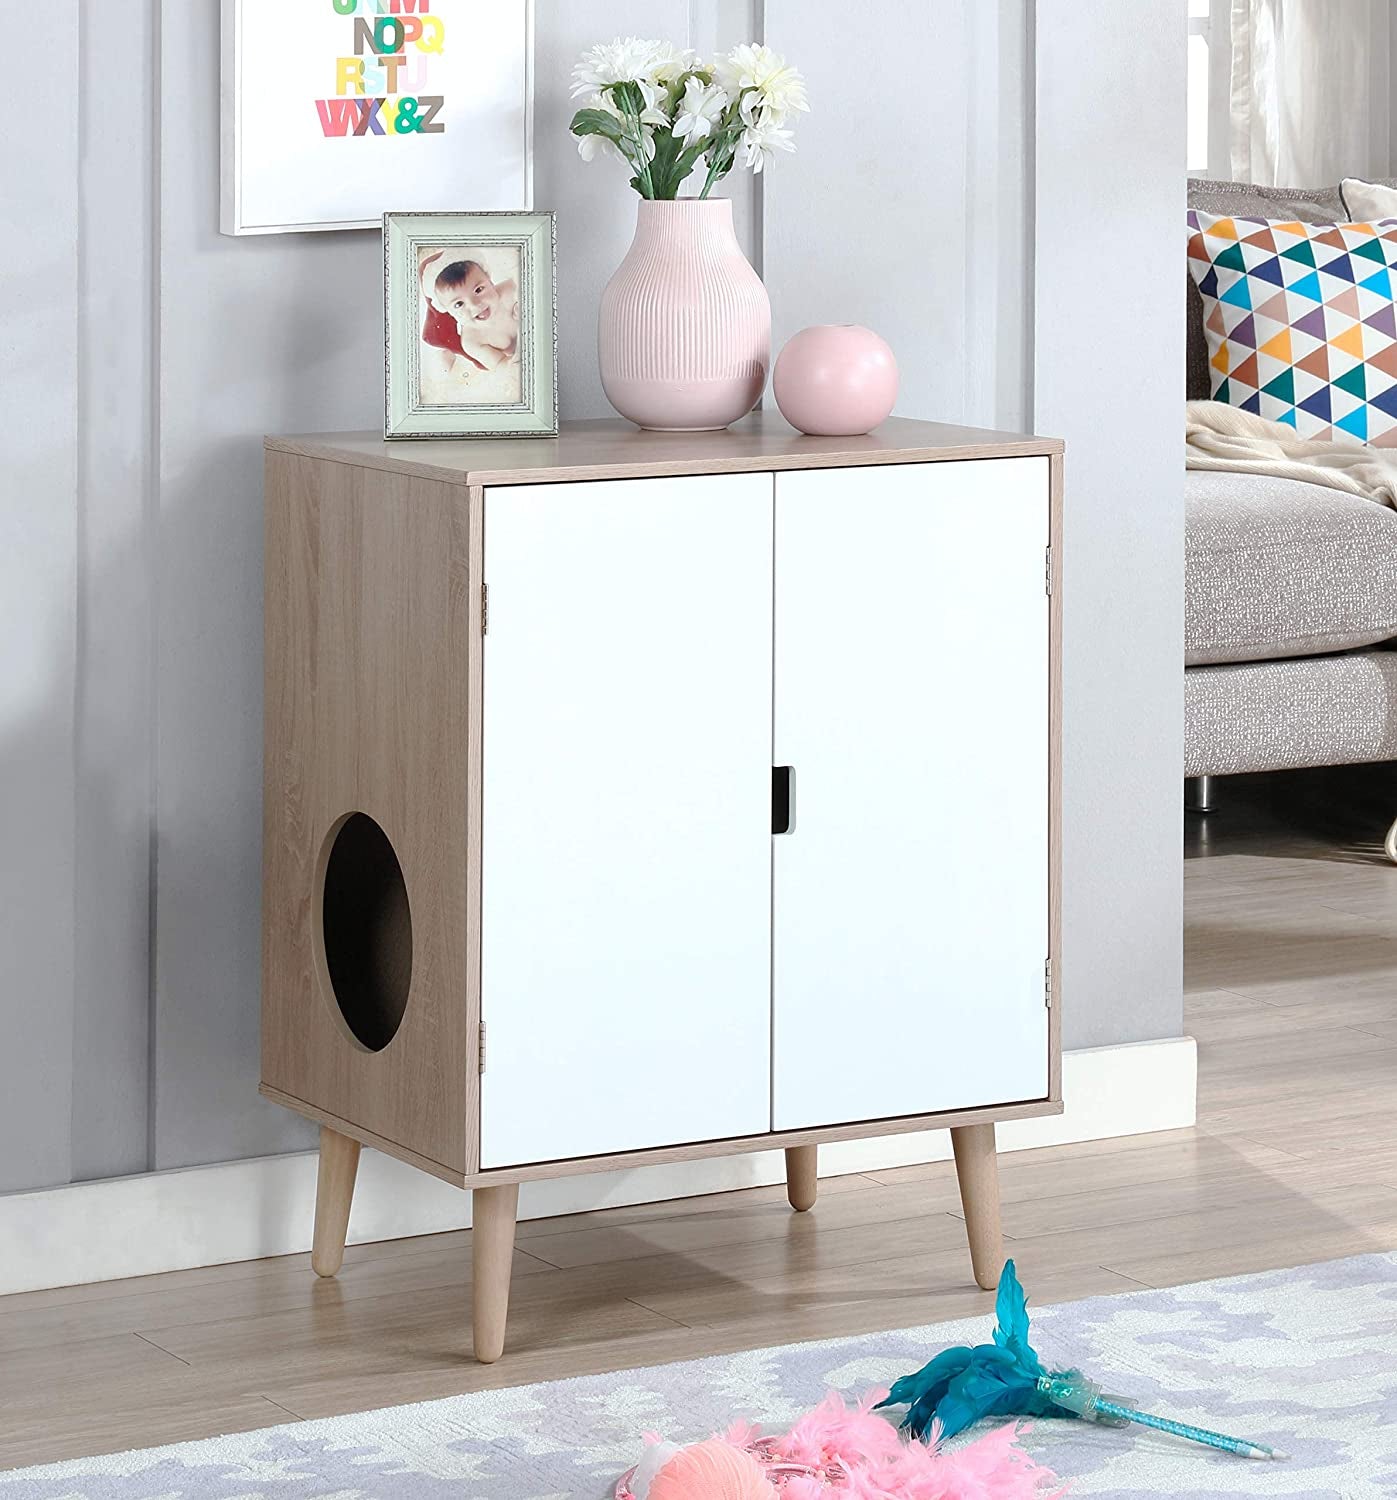 Penn-Plax Cat Walk Furniture: Contemporary Home Cat Litter Hide-Away Cabinet – Grey Wood Grain with White Doors